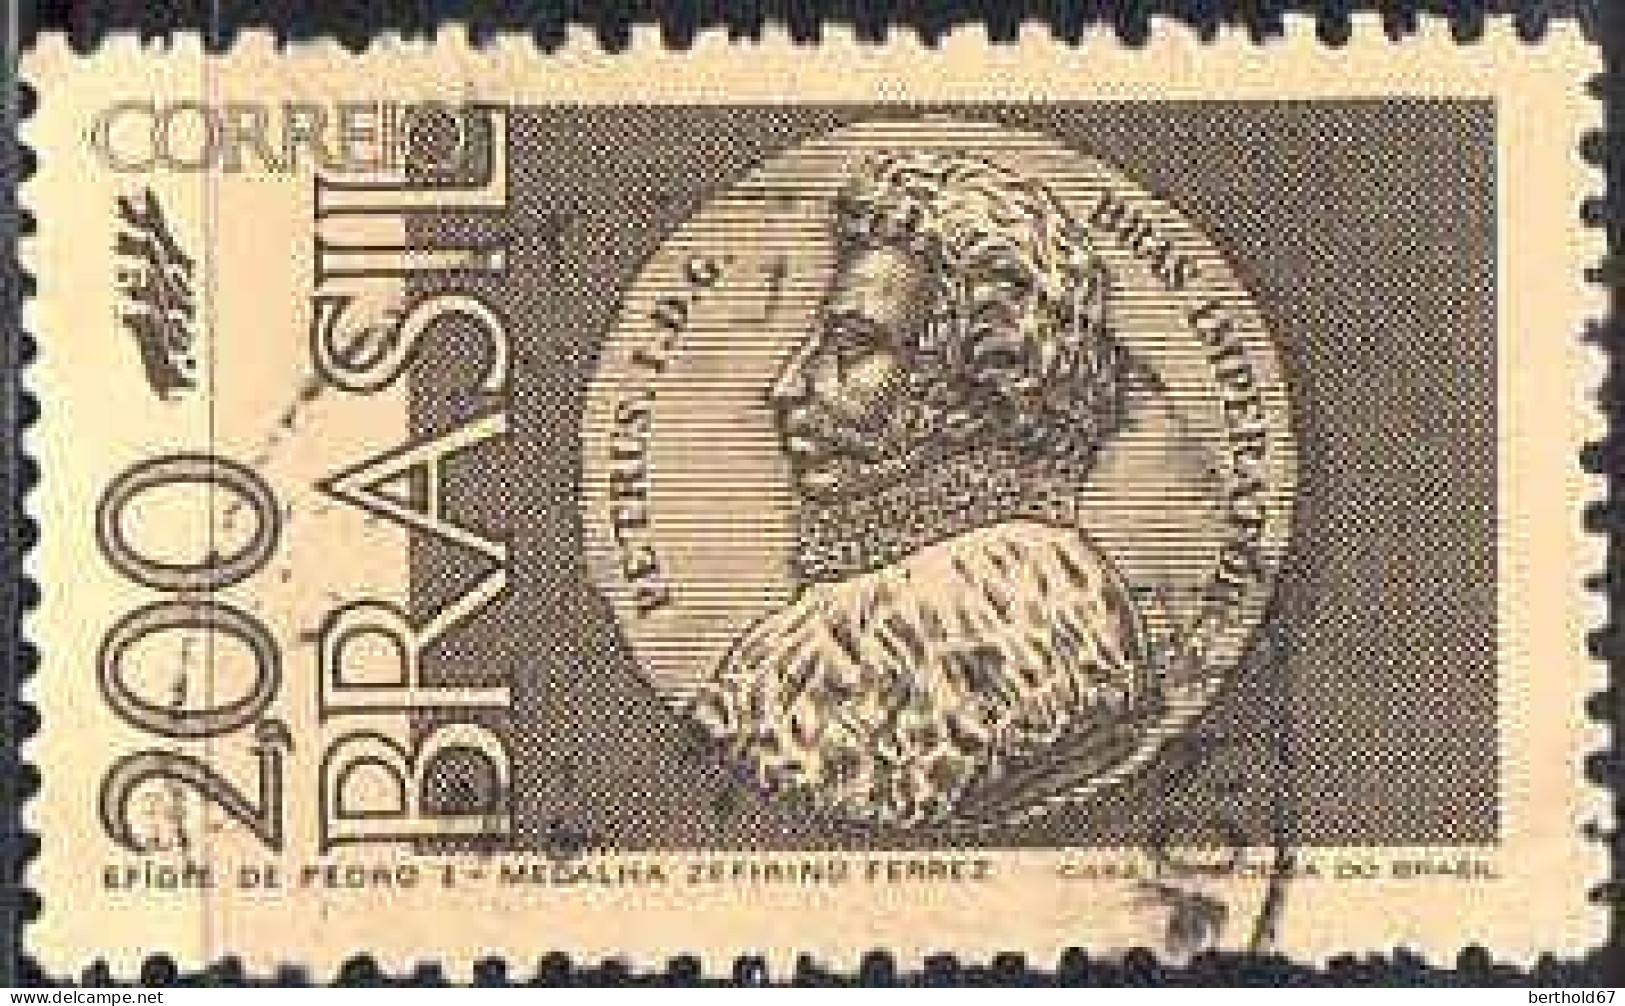 Brésil Poste Obl Yv:1010 Mi:1339 Efigie De Pedro I-Medalha Zefirino Ferrez (Beau Cachet Rond) - Gebraucht